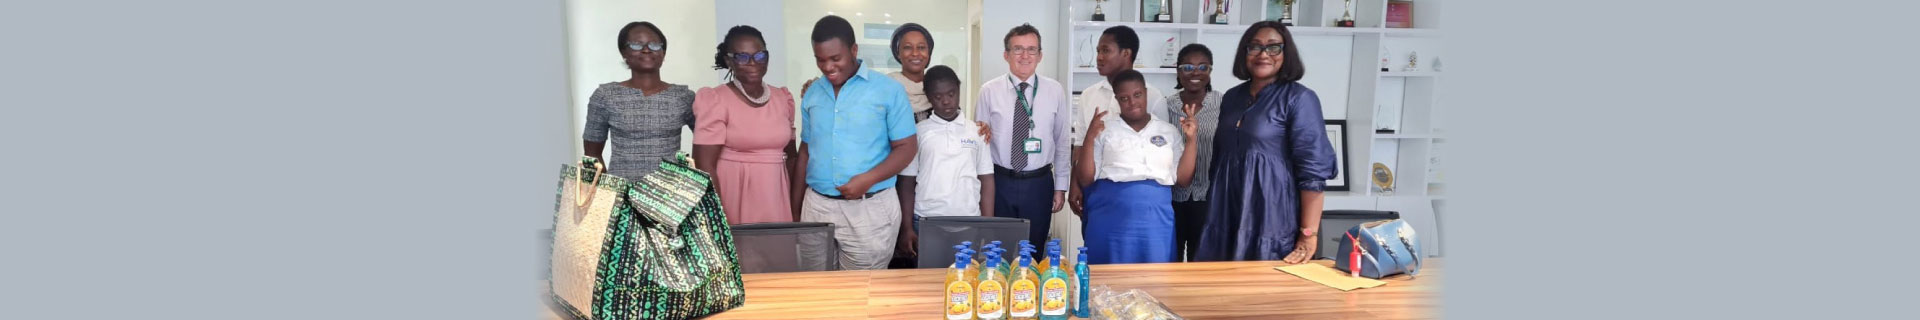 Partnership with an international school in Ghana